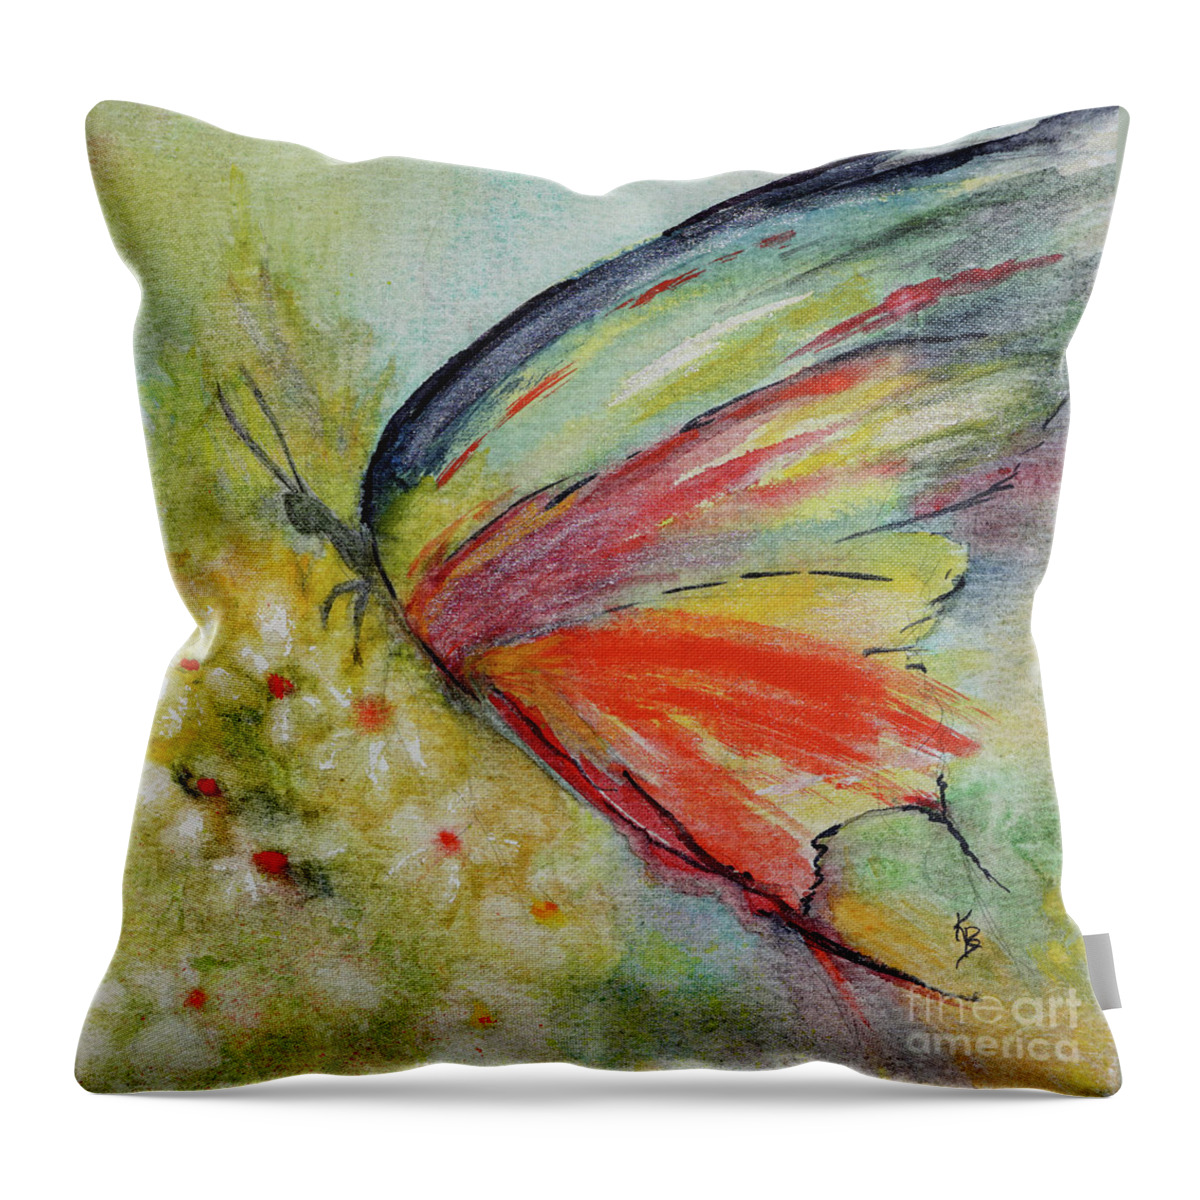 Butterfly Throw Pillow featuring the painting Butterfly 3 by Karen Fleschler